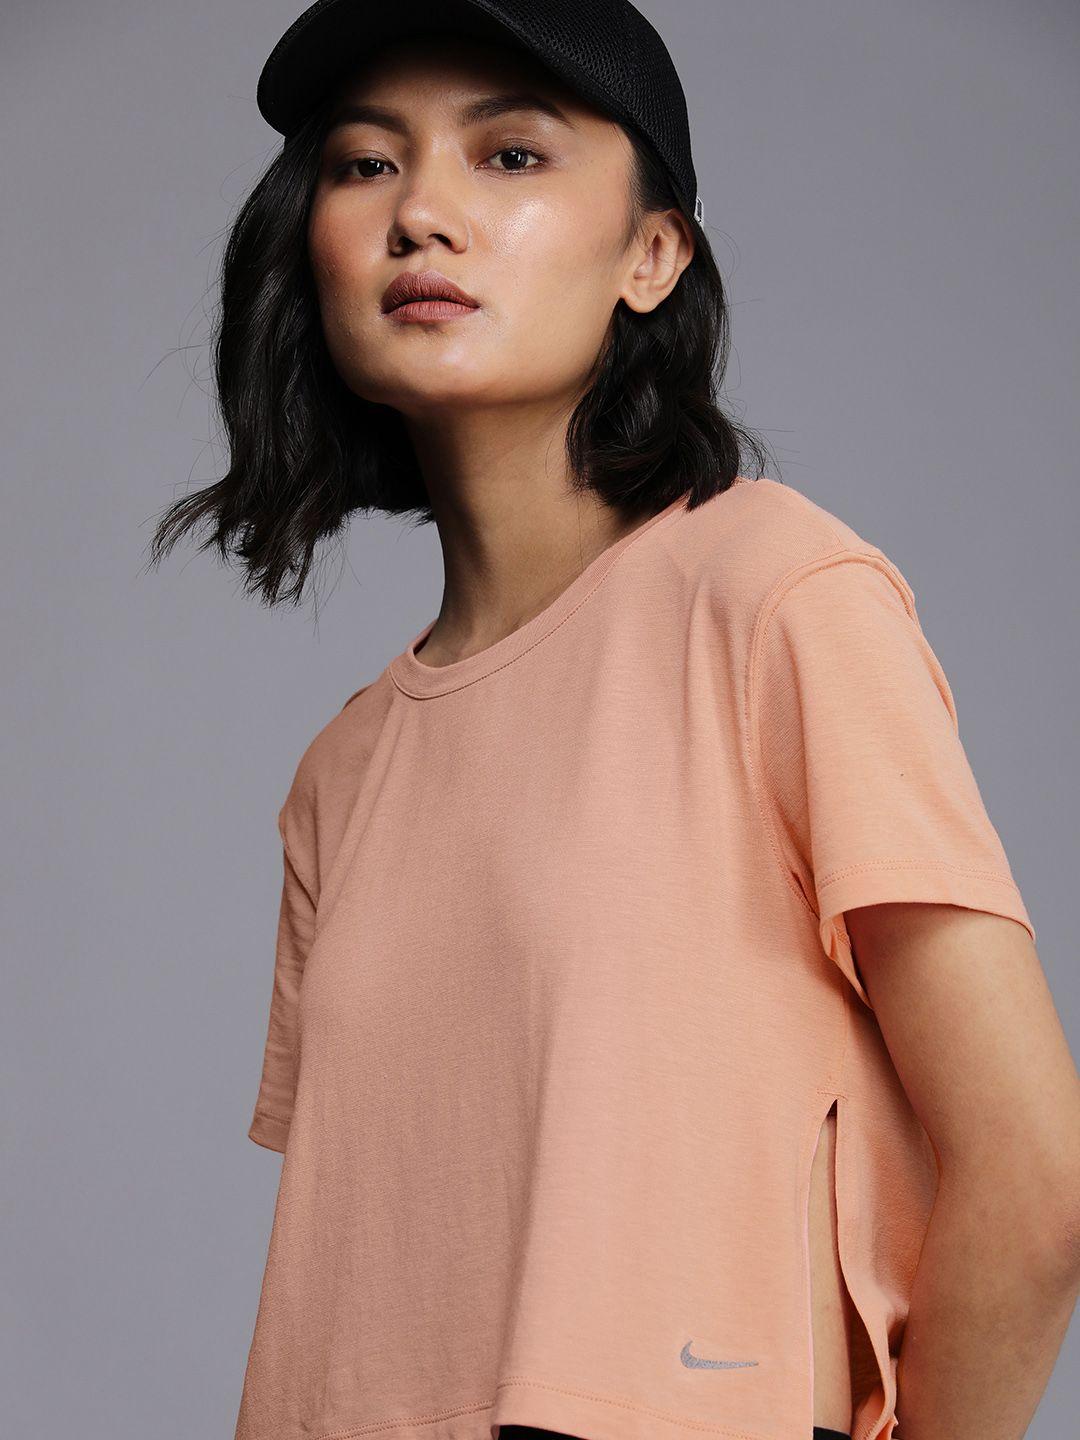 nike-women-peach-coloured-brand-logo-printed-top-wide-side-slit